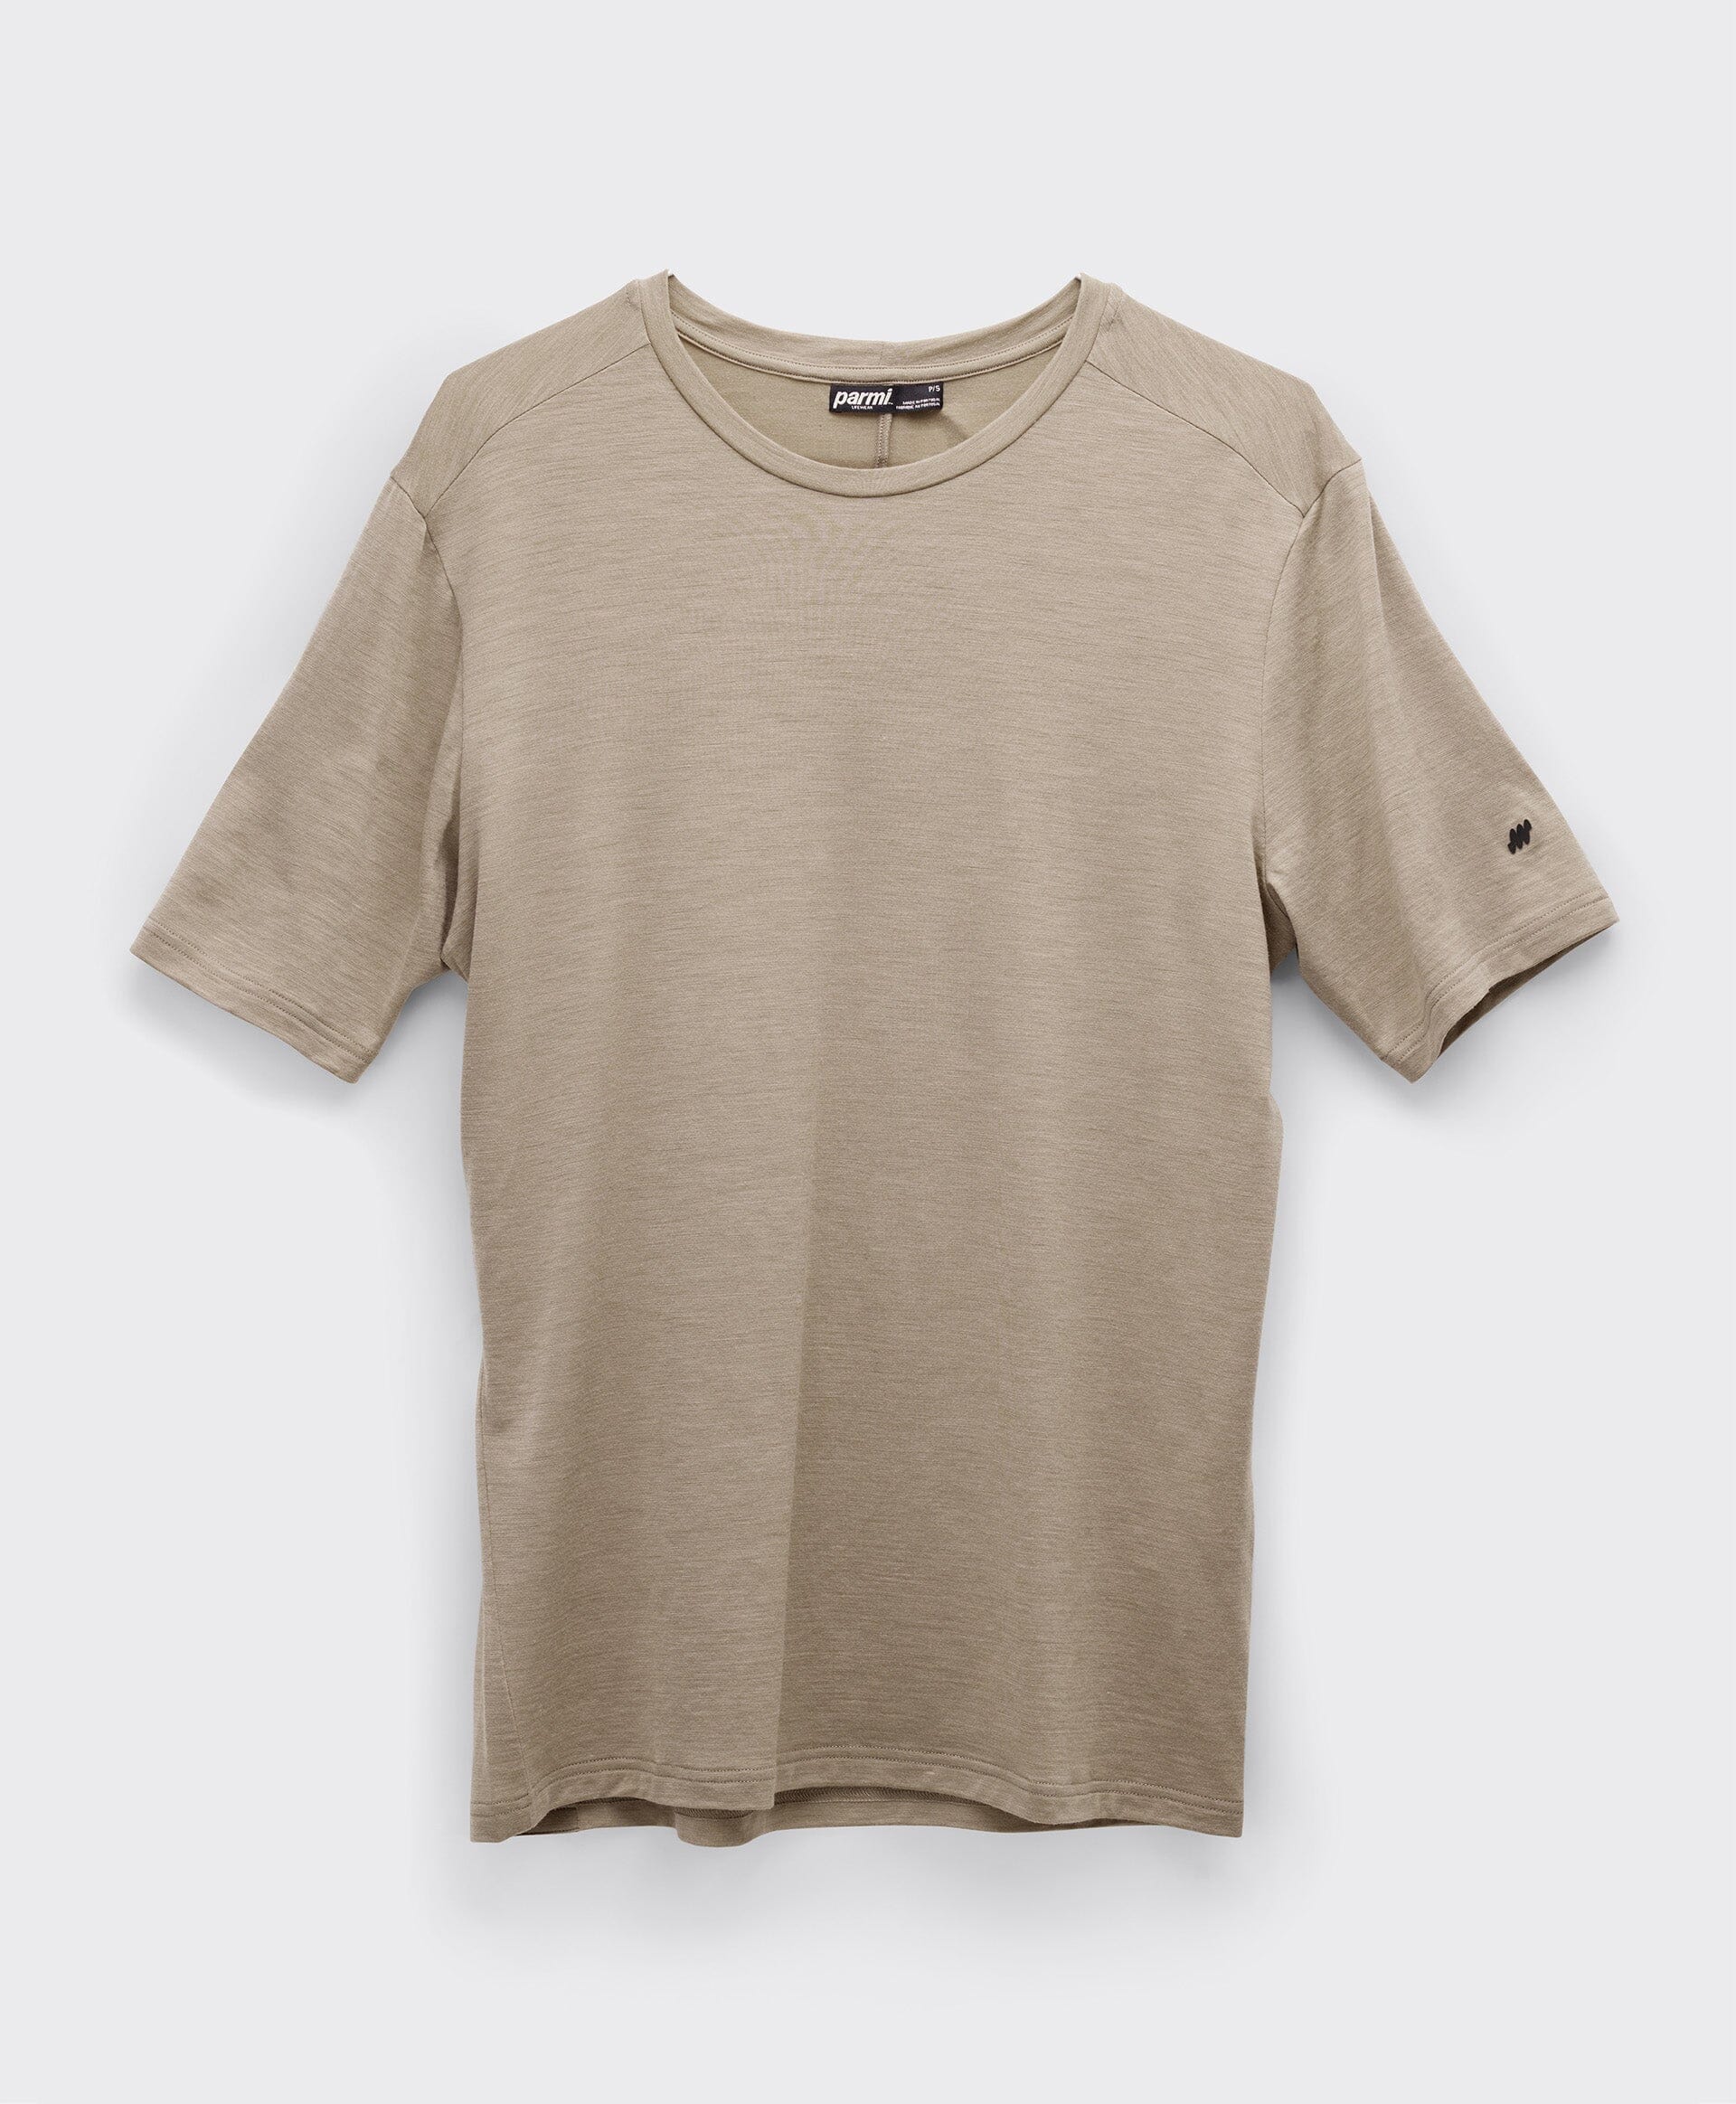 Parmi Lifewear - Merino Free Range Men's T-Shirts Parmi Scone L 